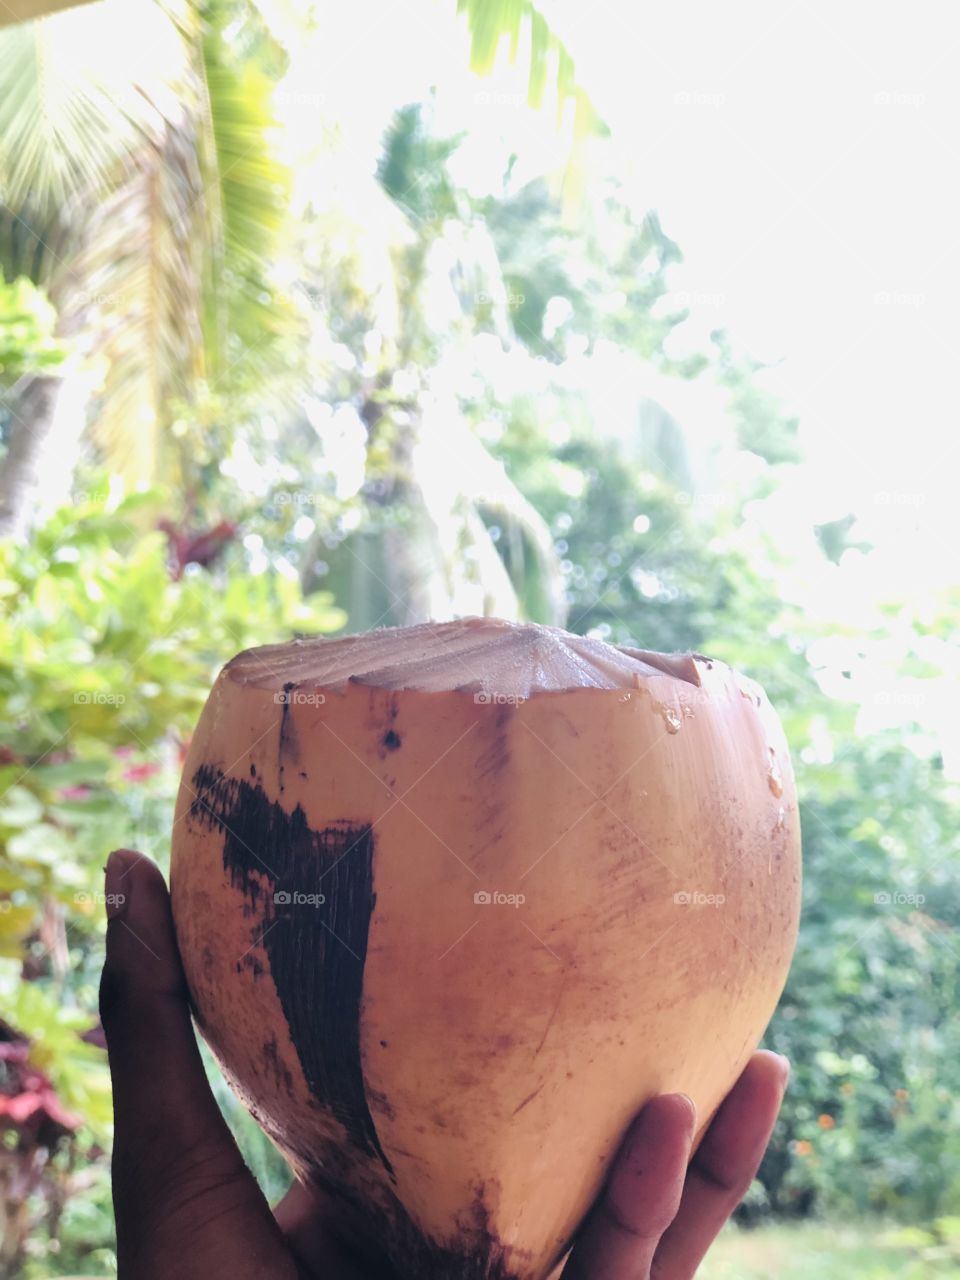 Coconut 